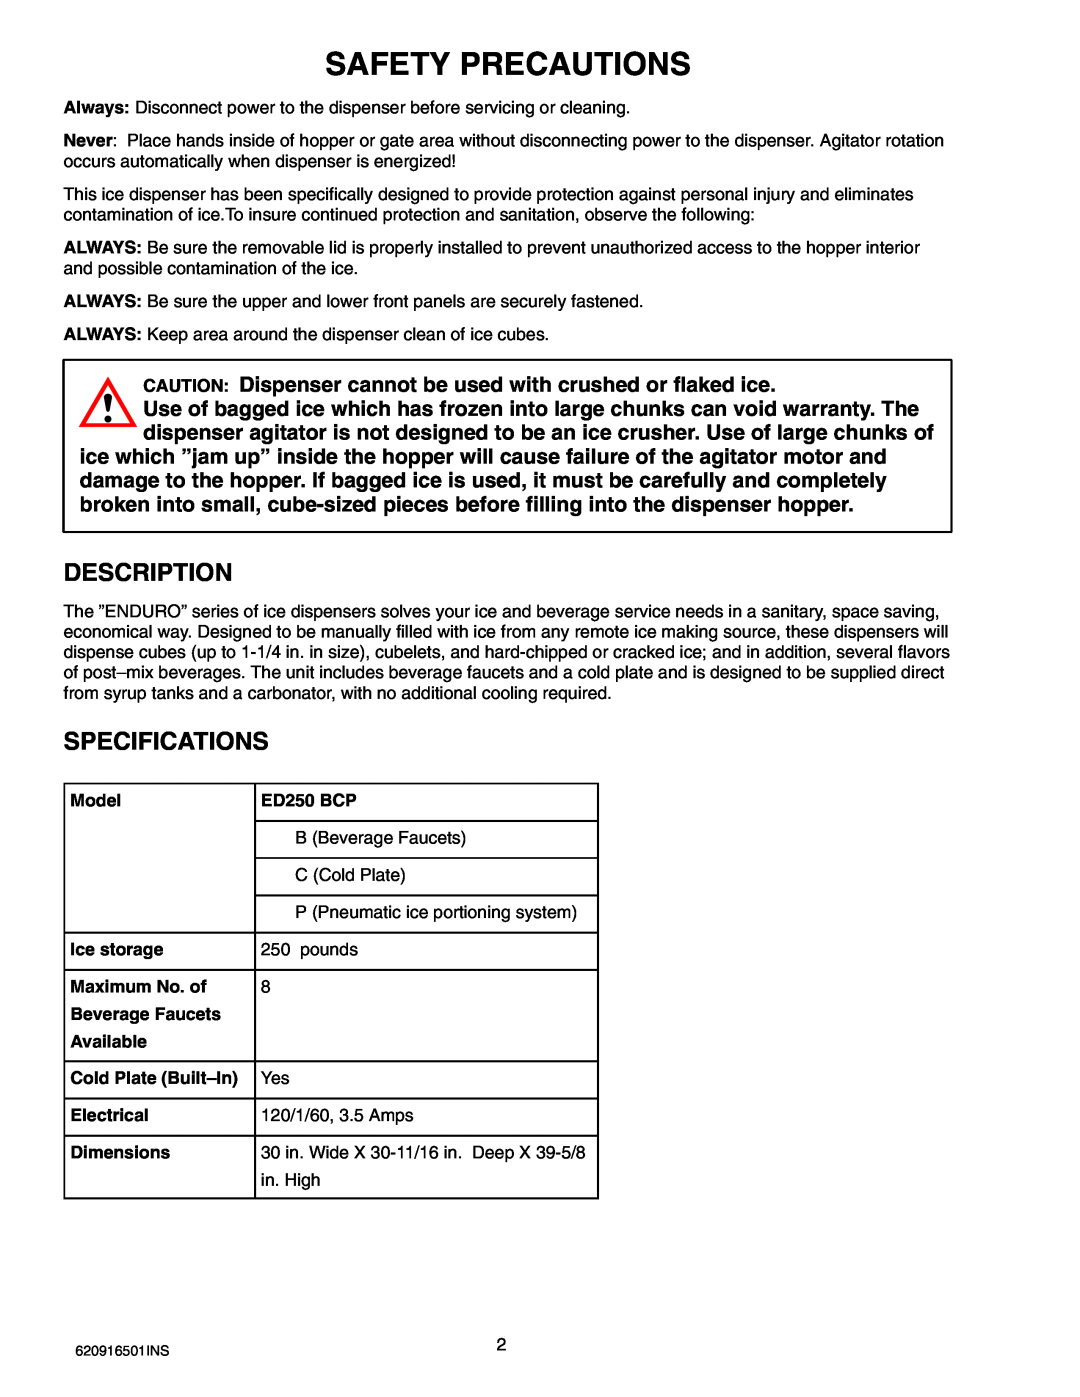 Cornelius ED-250 BCP installation manual Safety Precautions, Description, Specifications 